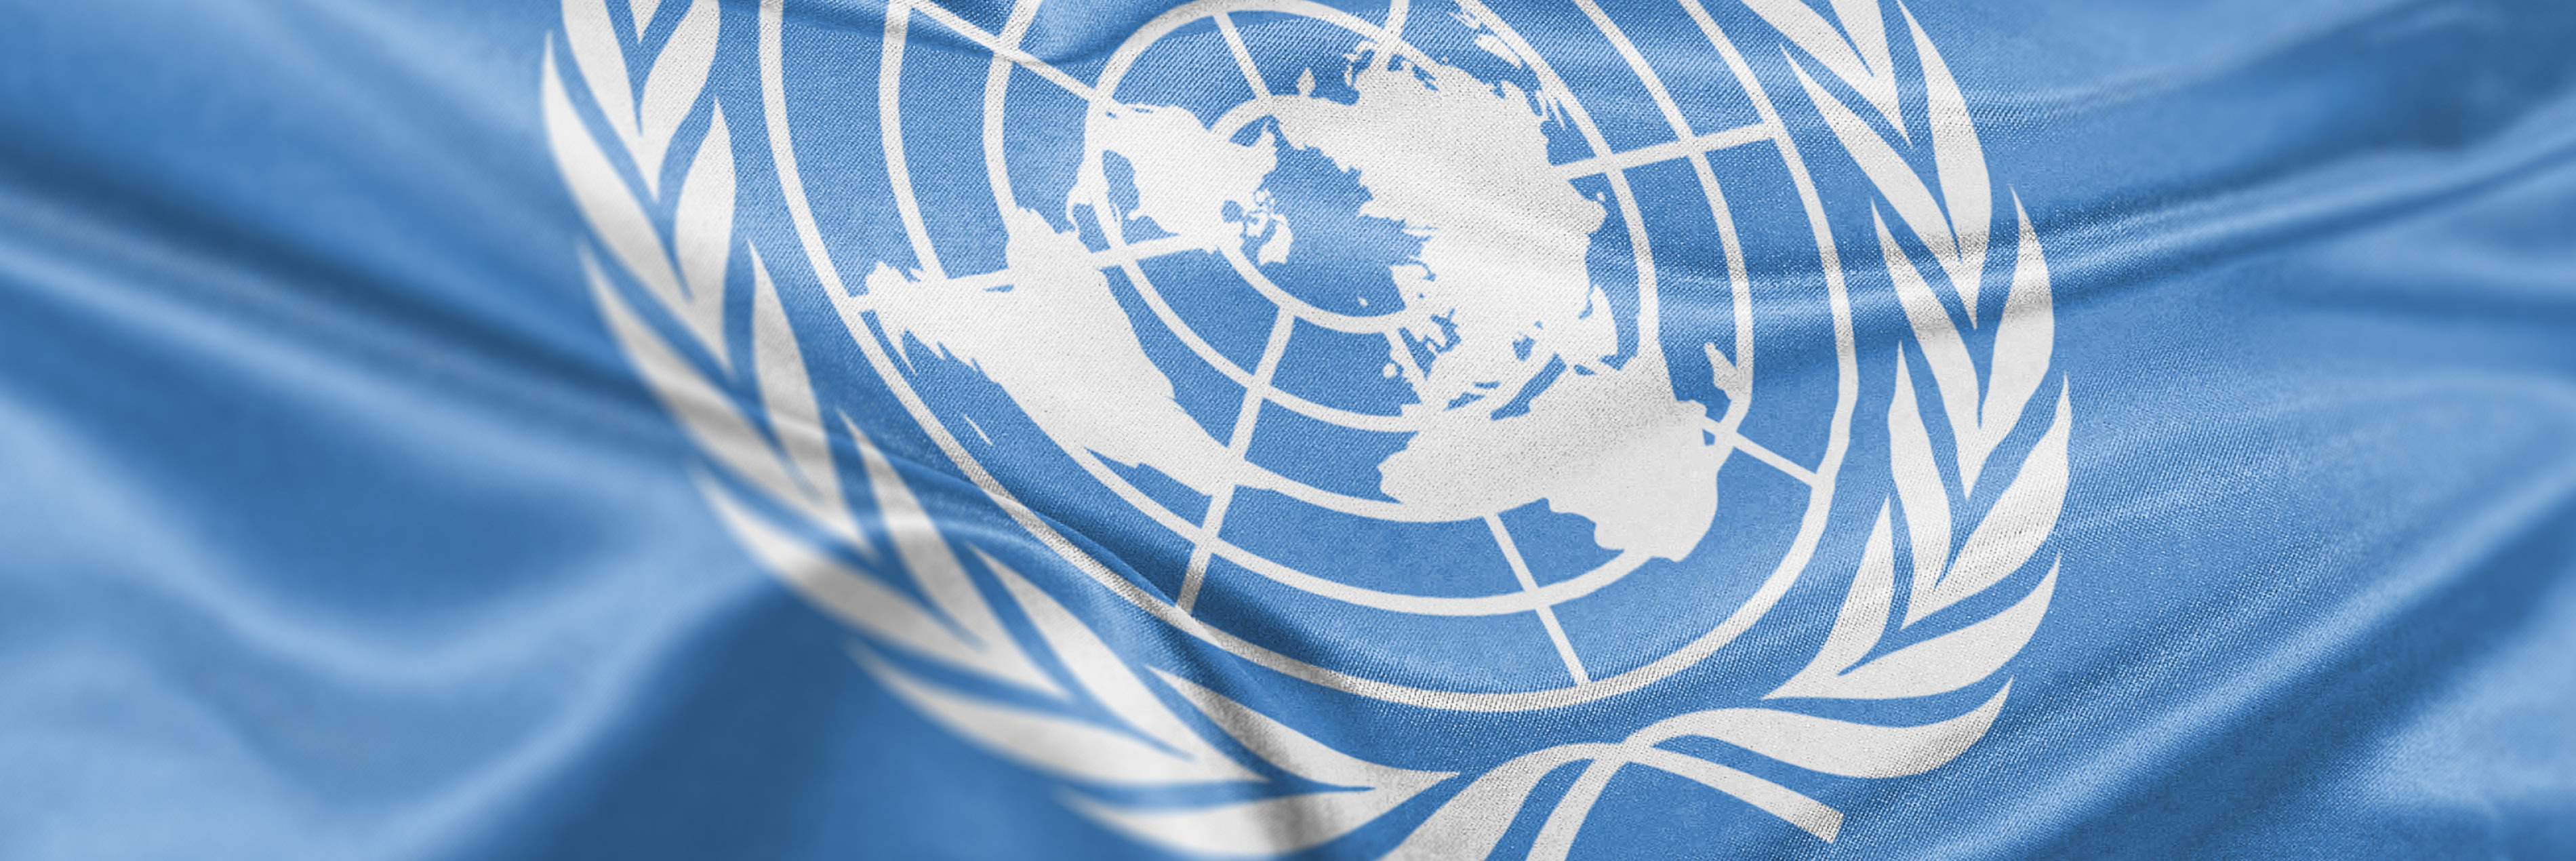 photo of United Nations flag